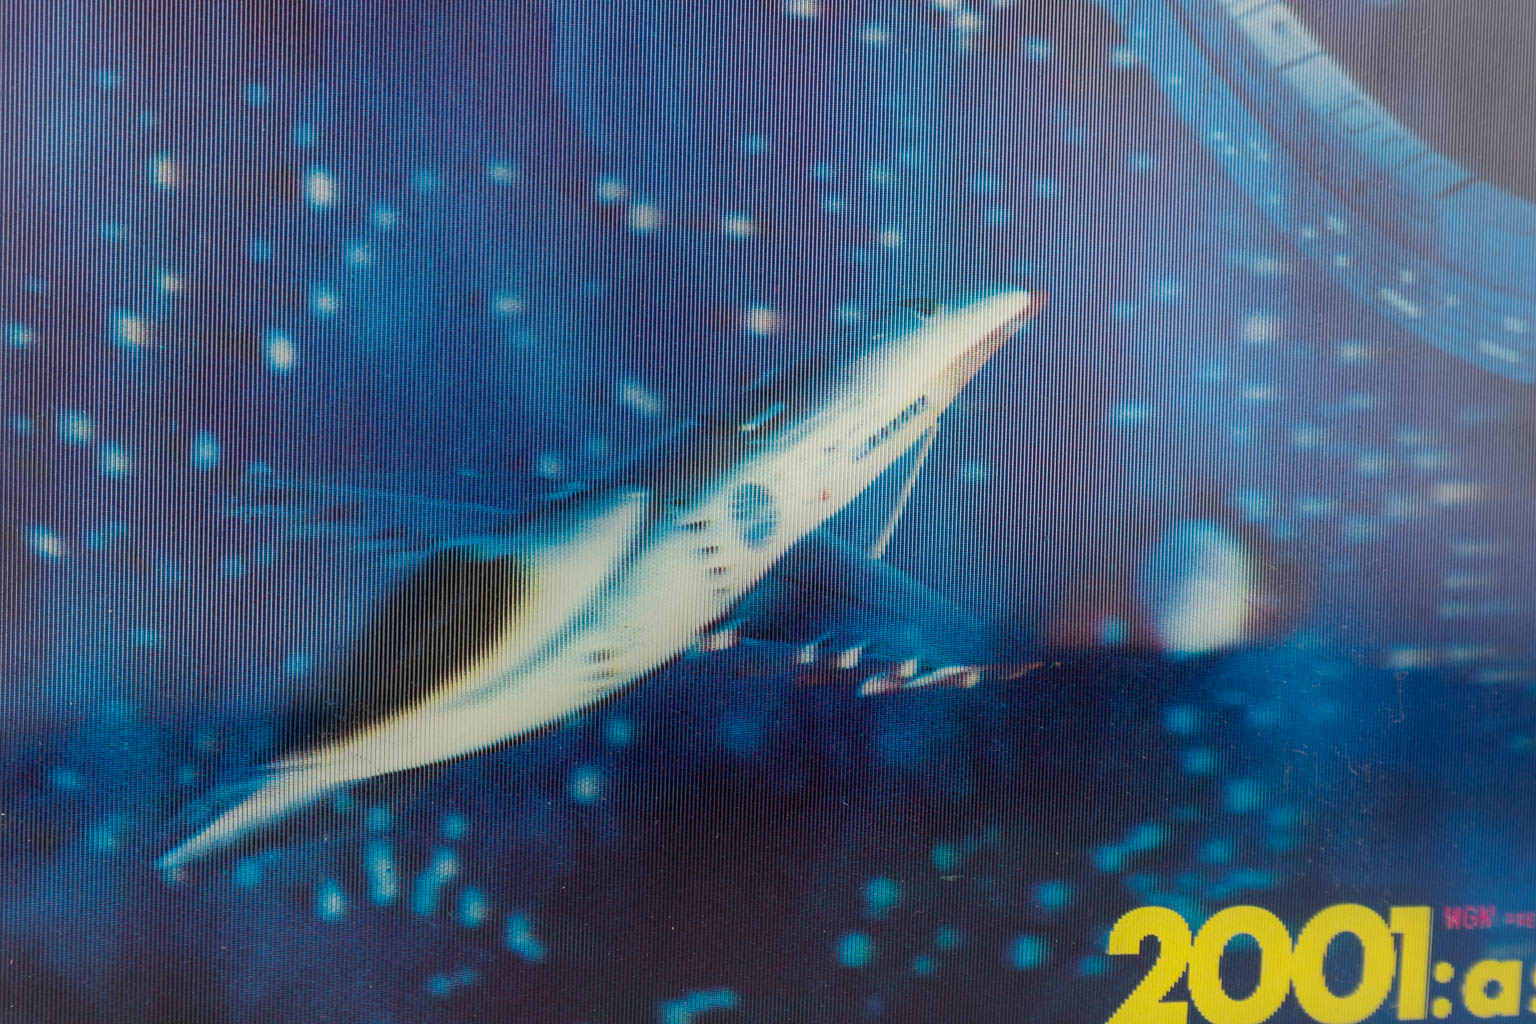 2001: A Space Odyssey, poster, US, Cinerama 3D, hologram. 1968. (W: 26,7 x H: 34,7 cm)